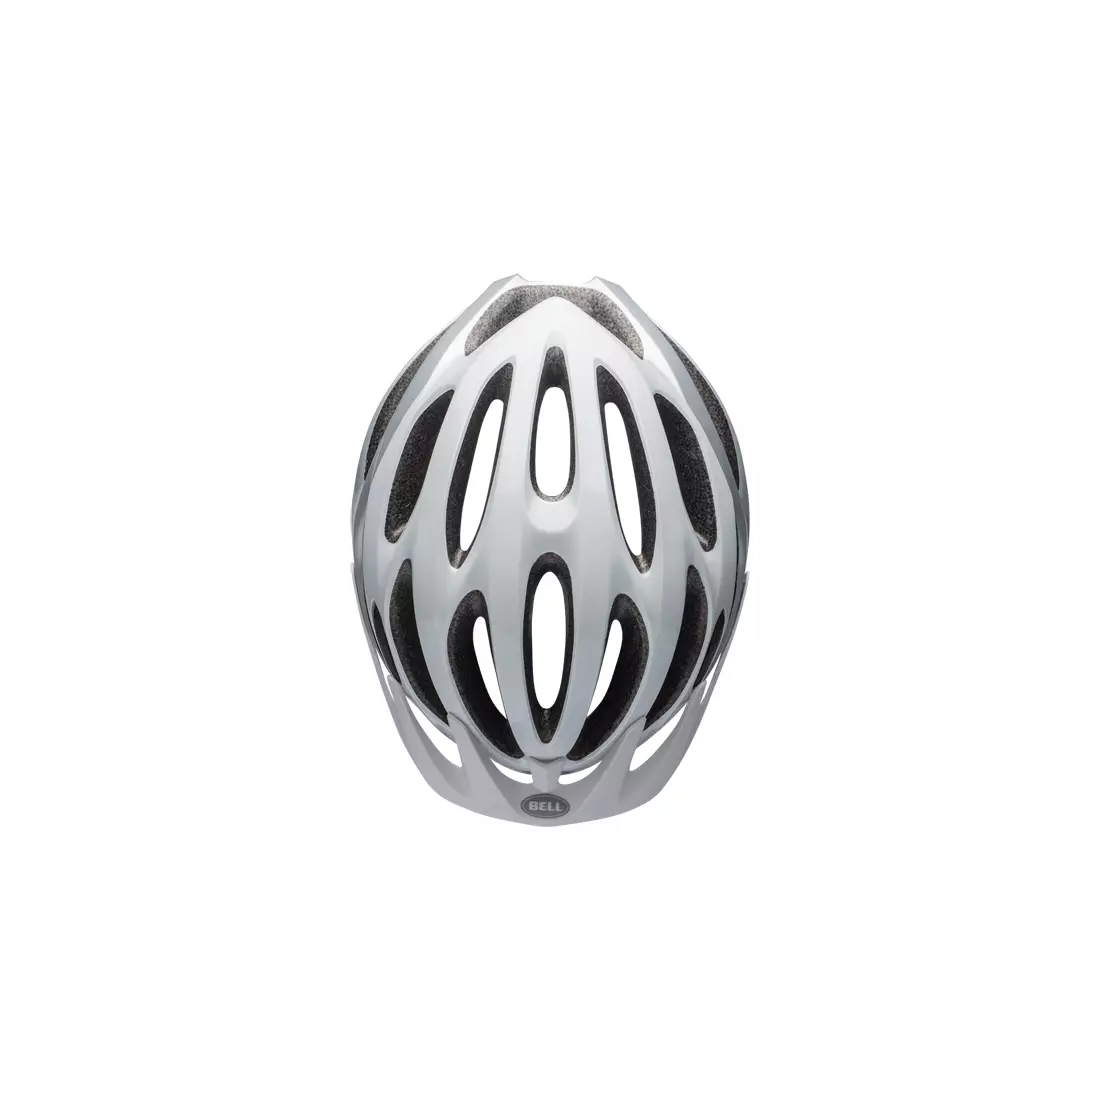 BELL MTB TRAVERSE BEL-7078379 cyklistická helma gloss white silver 